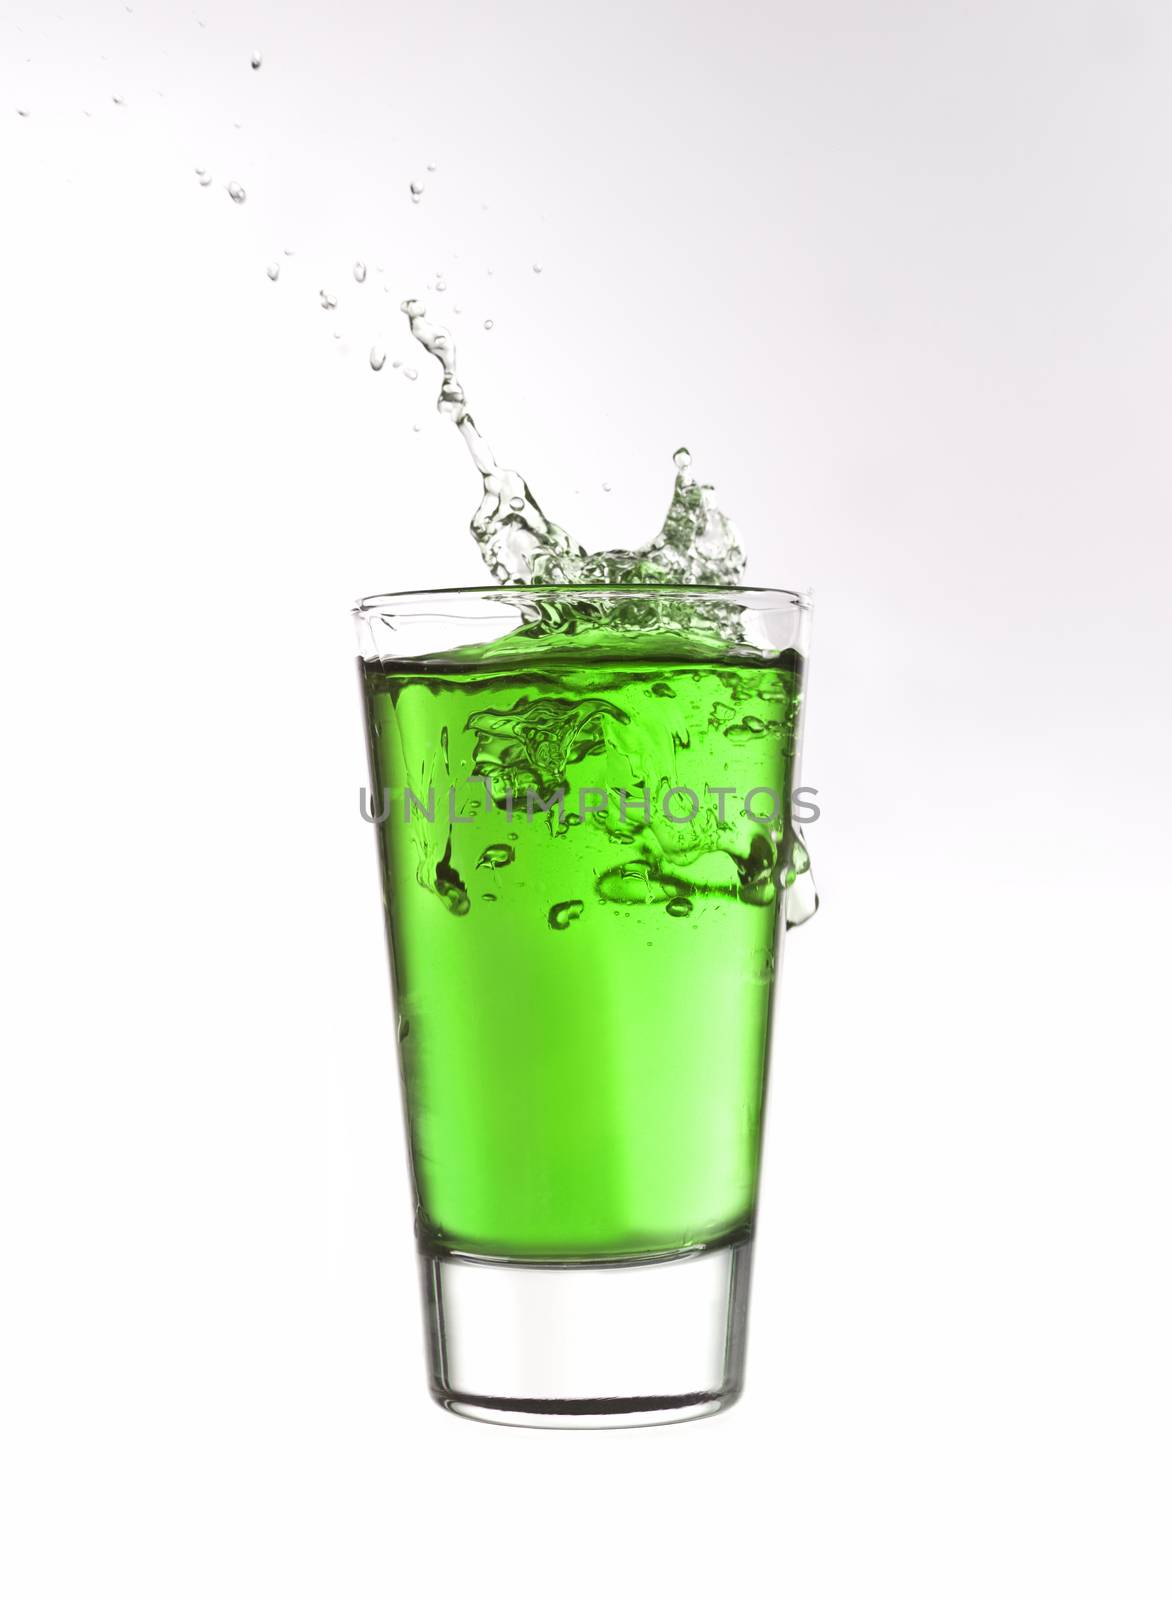 Splash in a glass of green lemonade by gemenacom